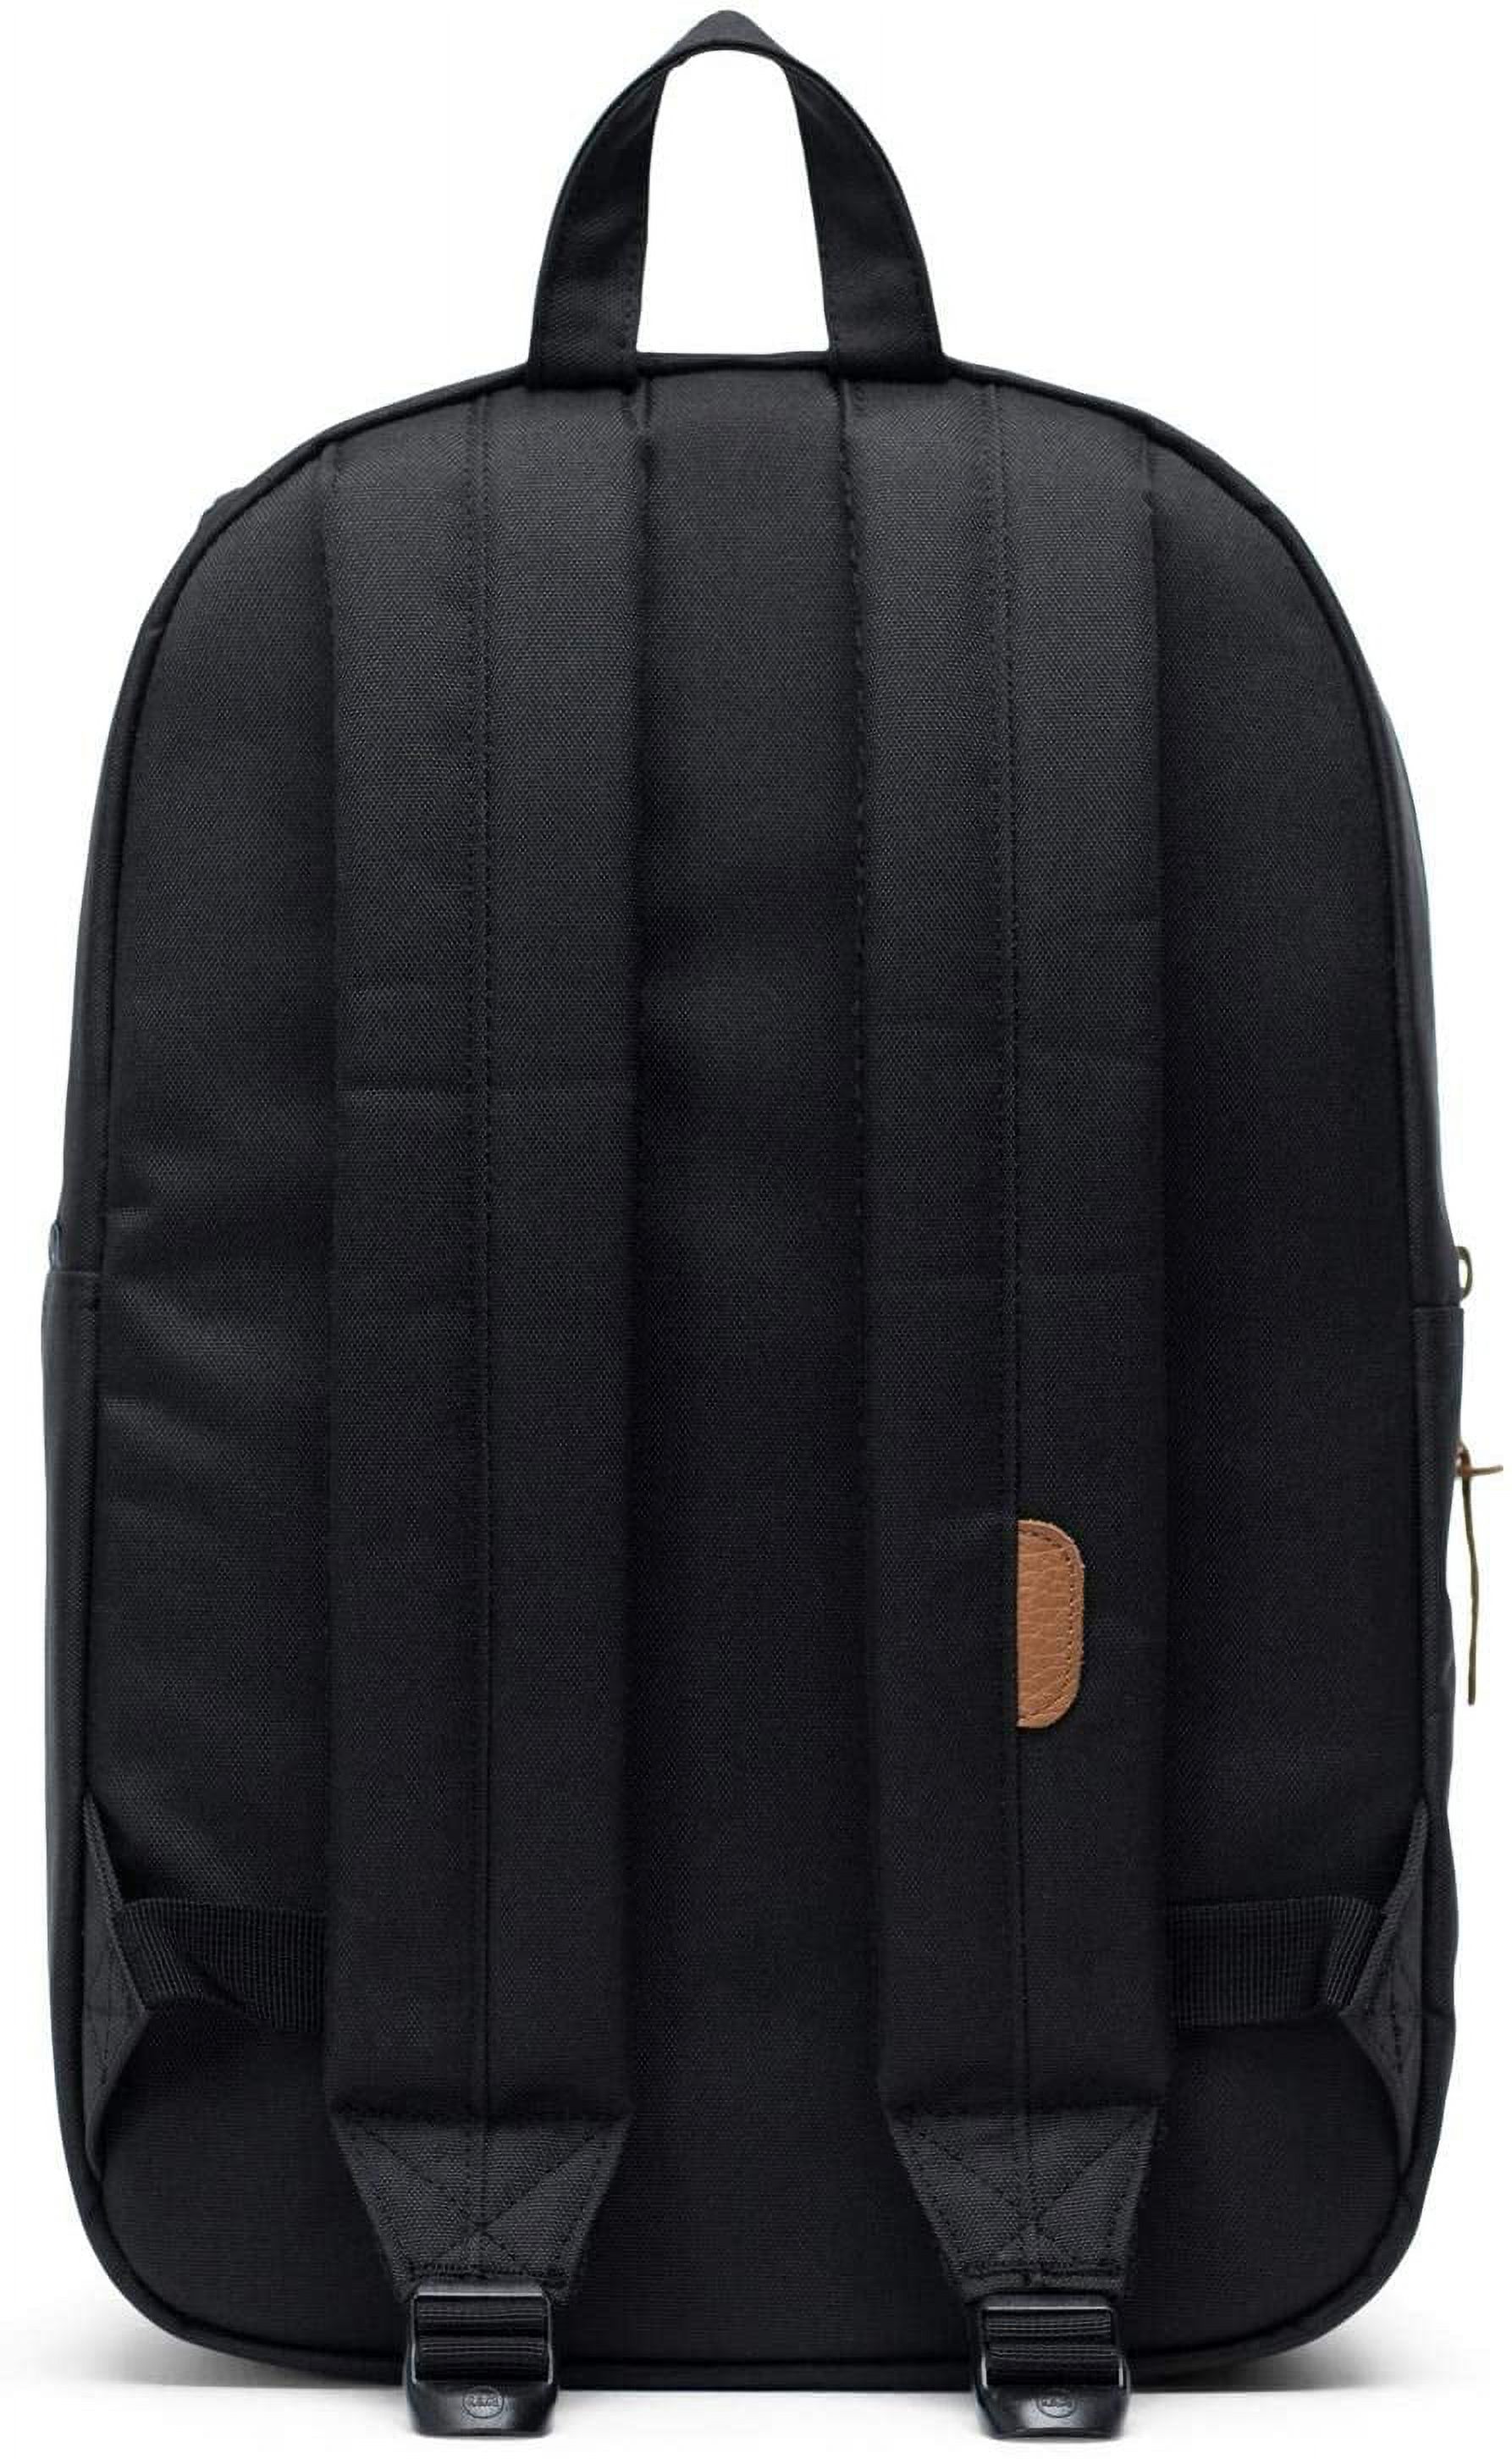 Herschel Settlement Unisex Canvas Black Fashion Backpack 10033-00001-OS - image 4 of 4